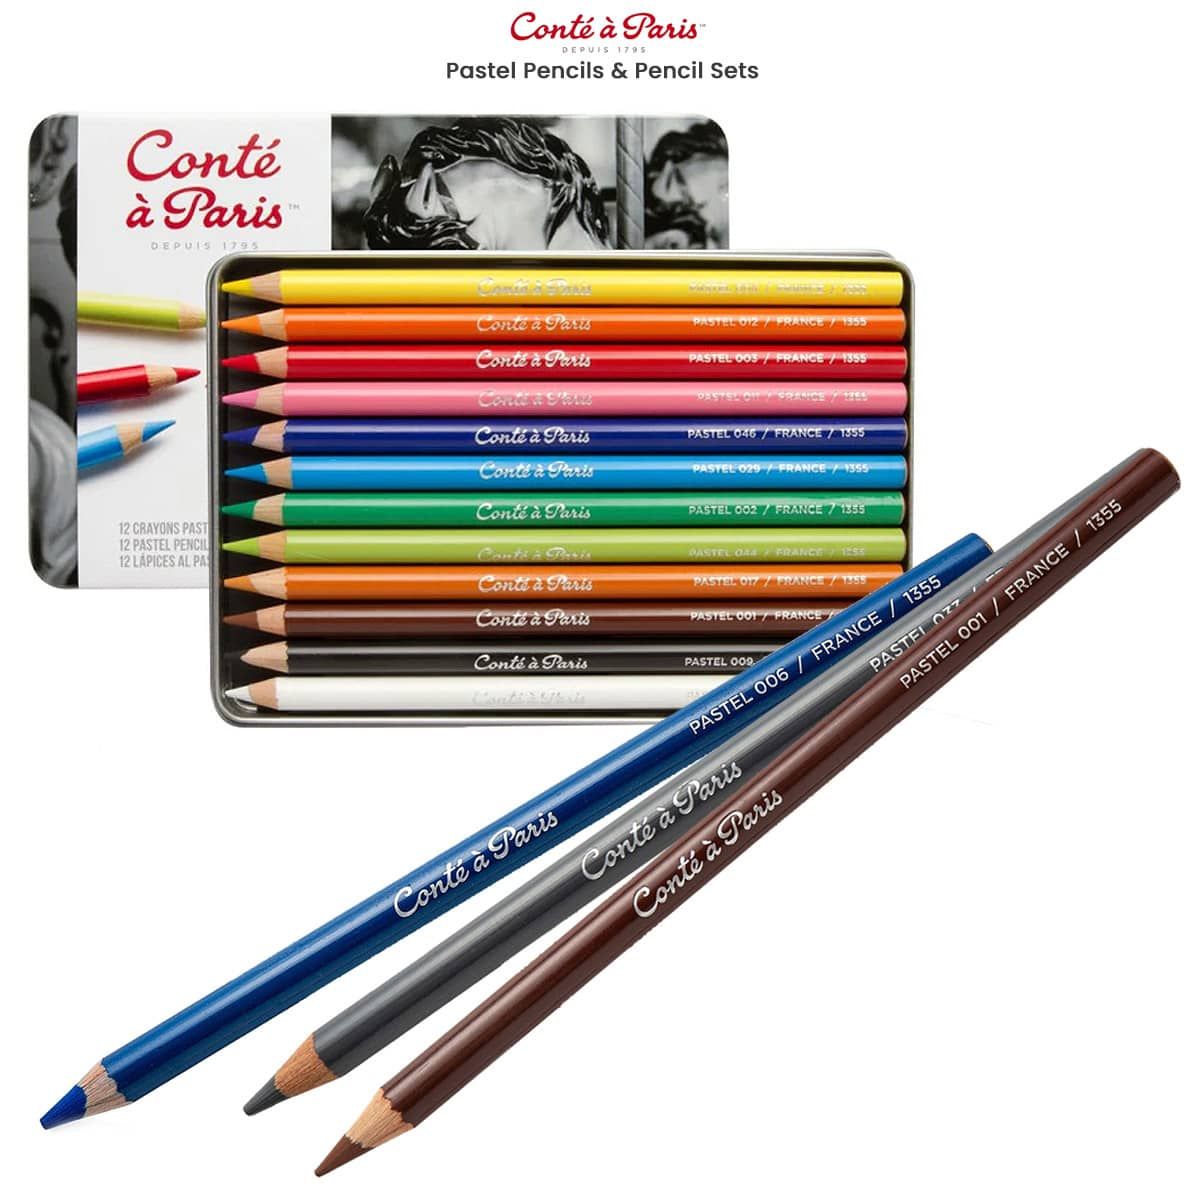 Crayola Crayon Set, 48-Colors - Sam Flax Atlanta